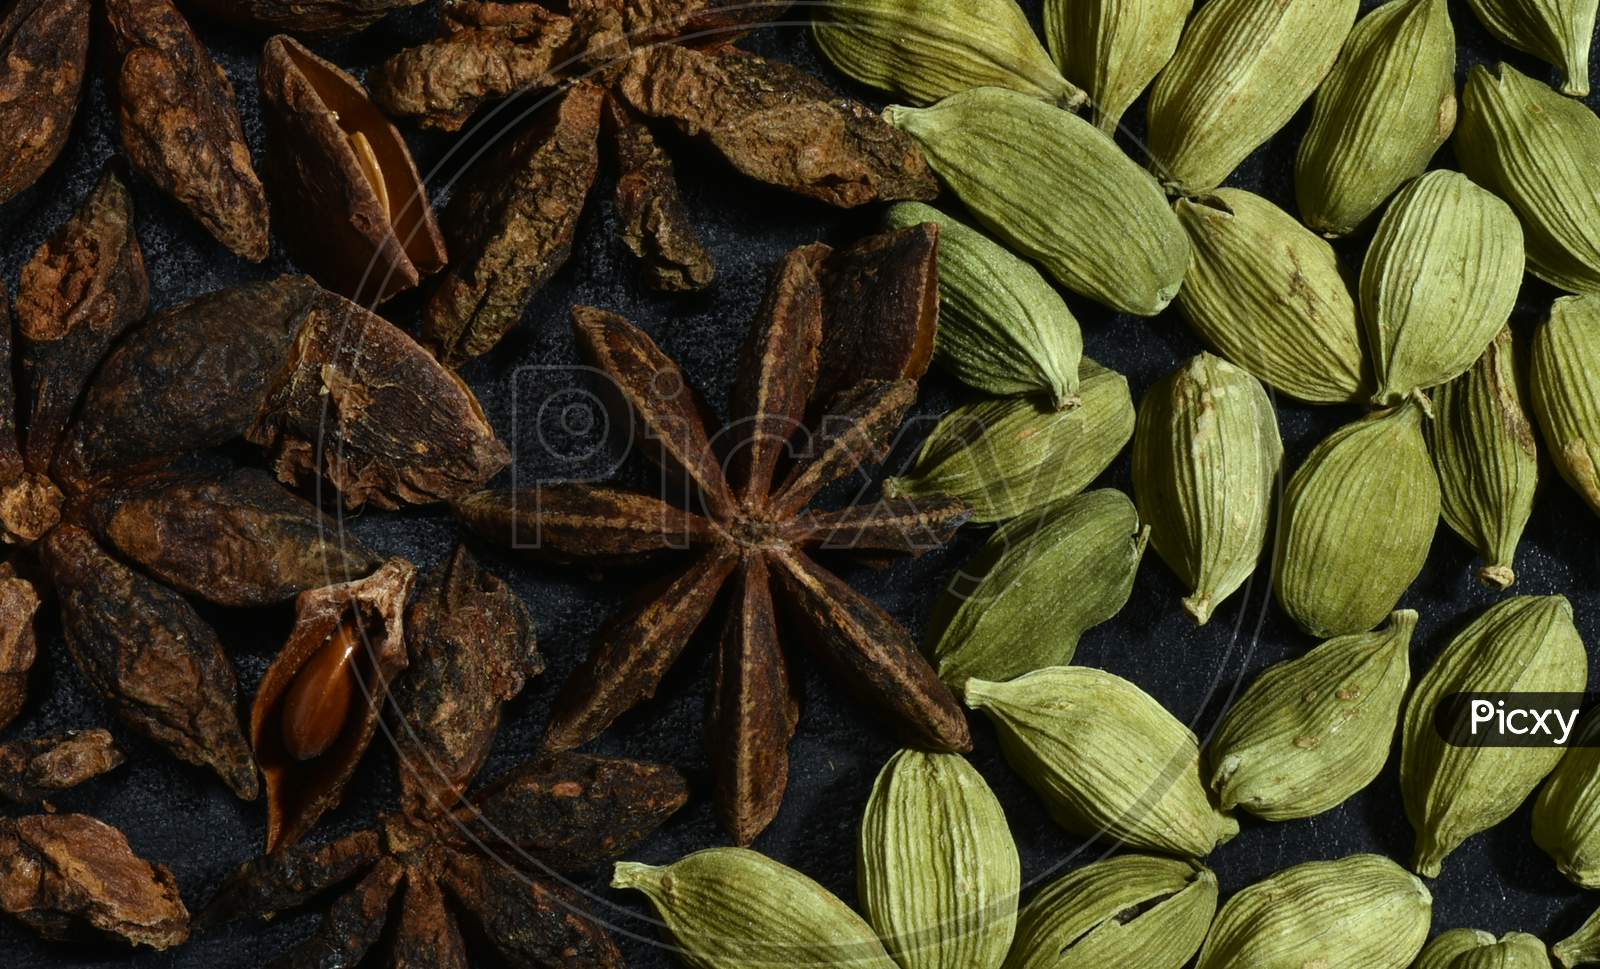 Star Anise (Chakra Phul)  and Cardamom closeup photos.Indian spices.